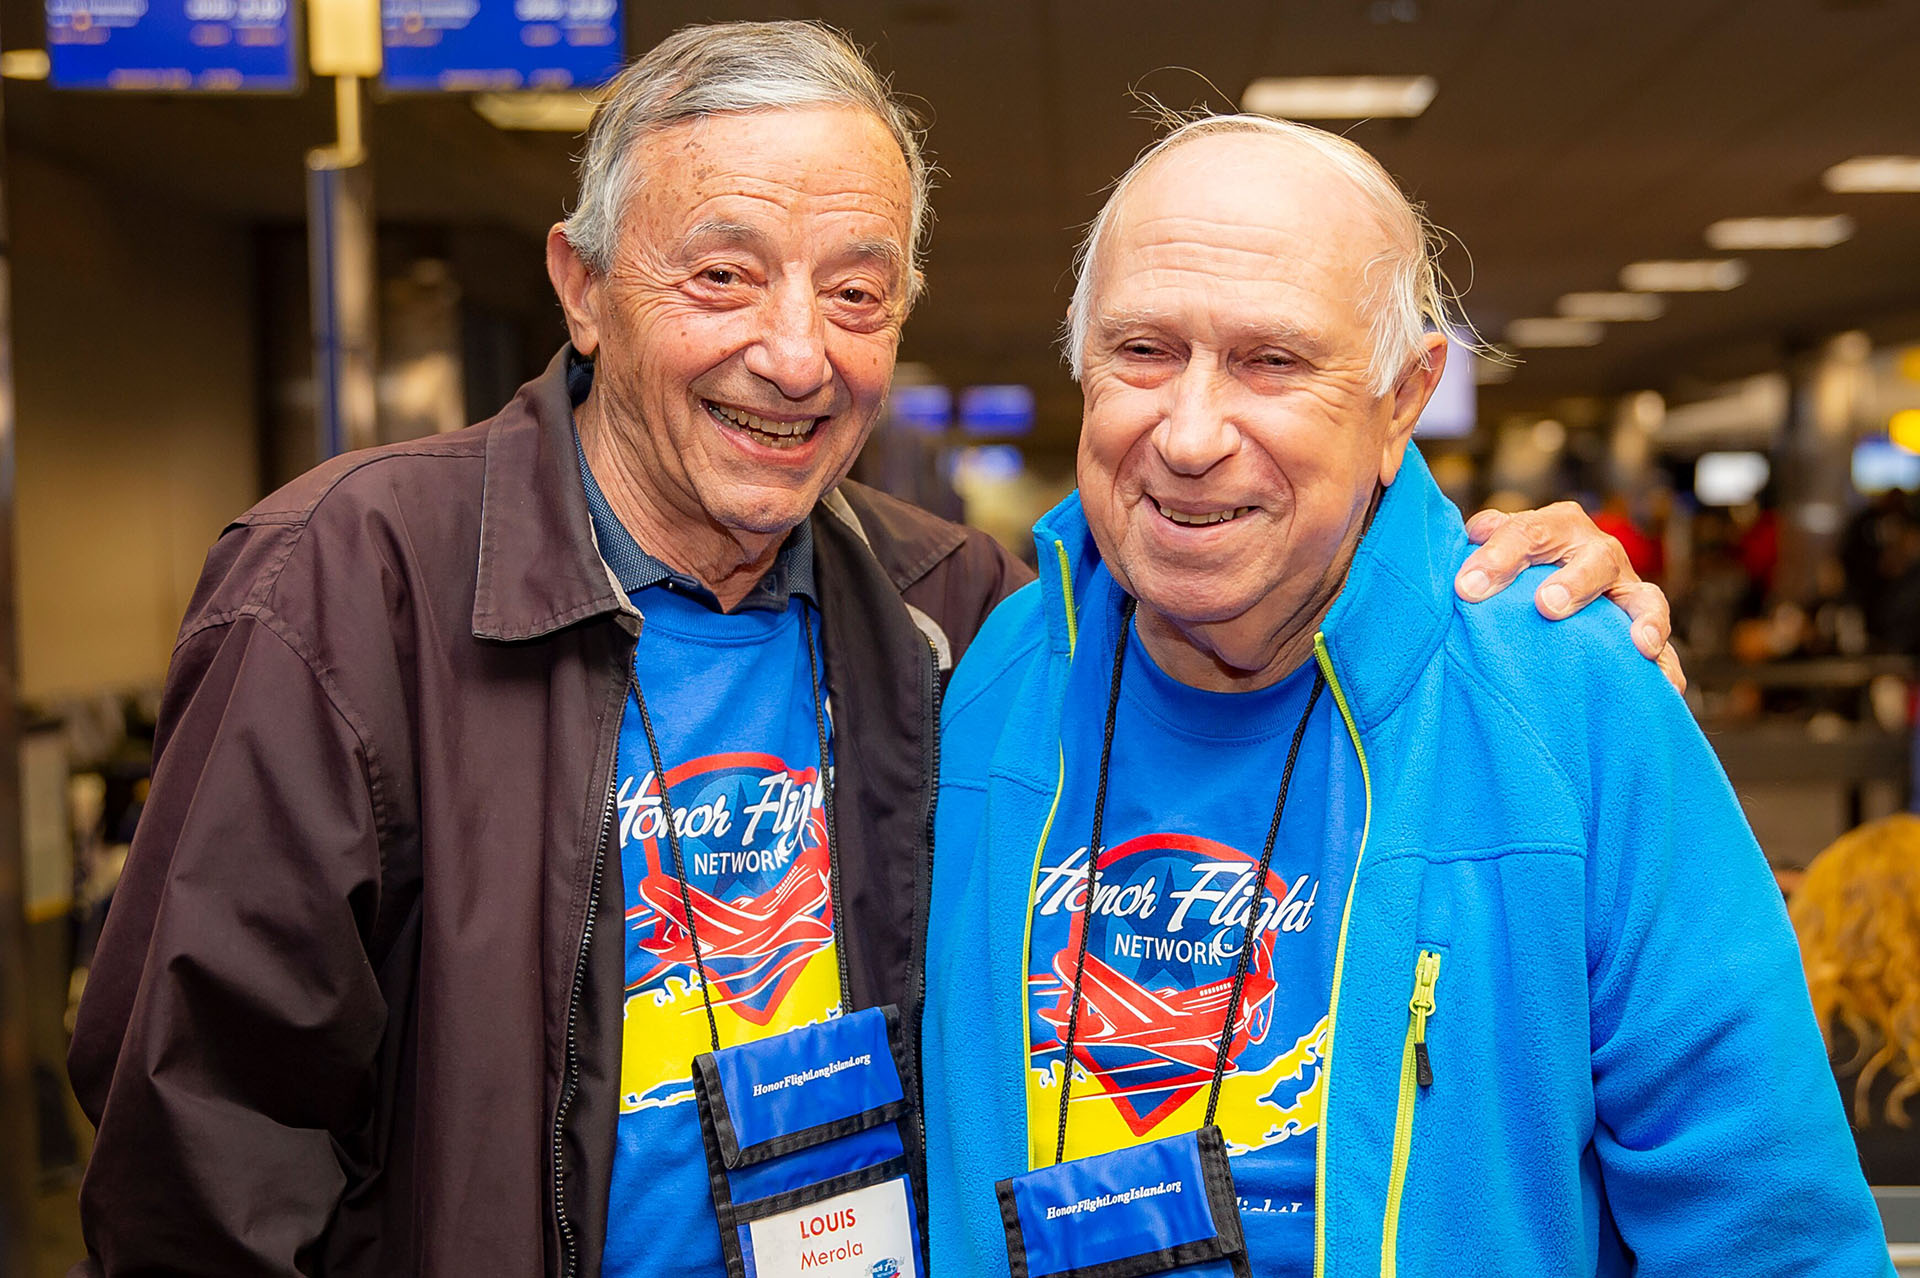 Honor Flight Long Island participants: WWII Army veteran Louis Merola, 93, with Navy veteran Joe Taranto, 88, who served in the Korean War.